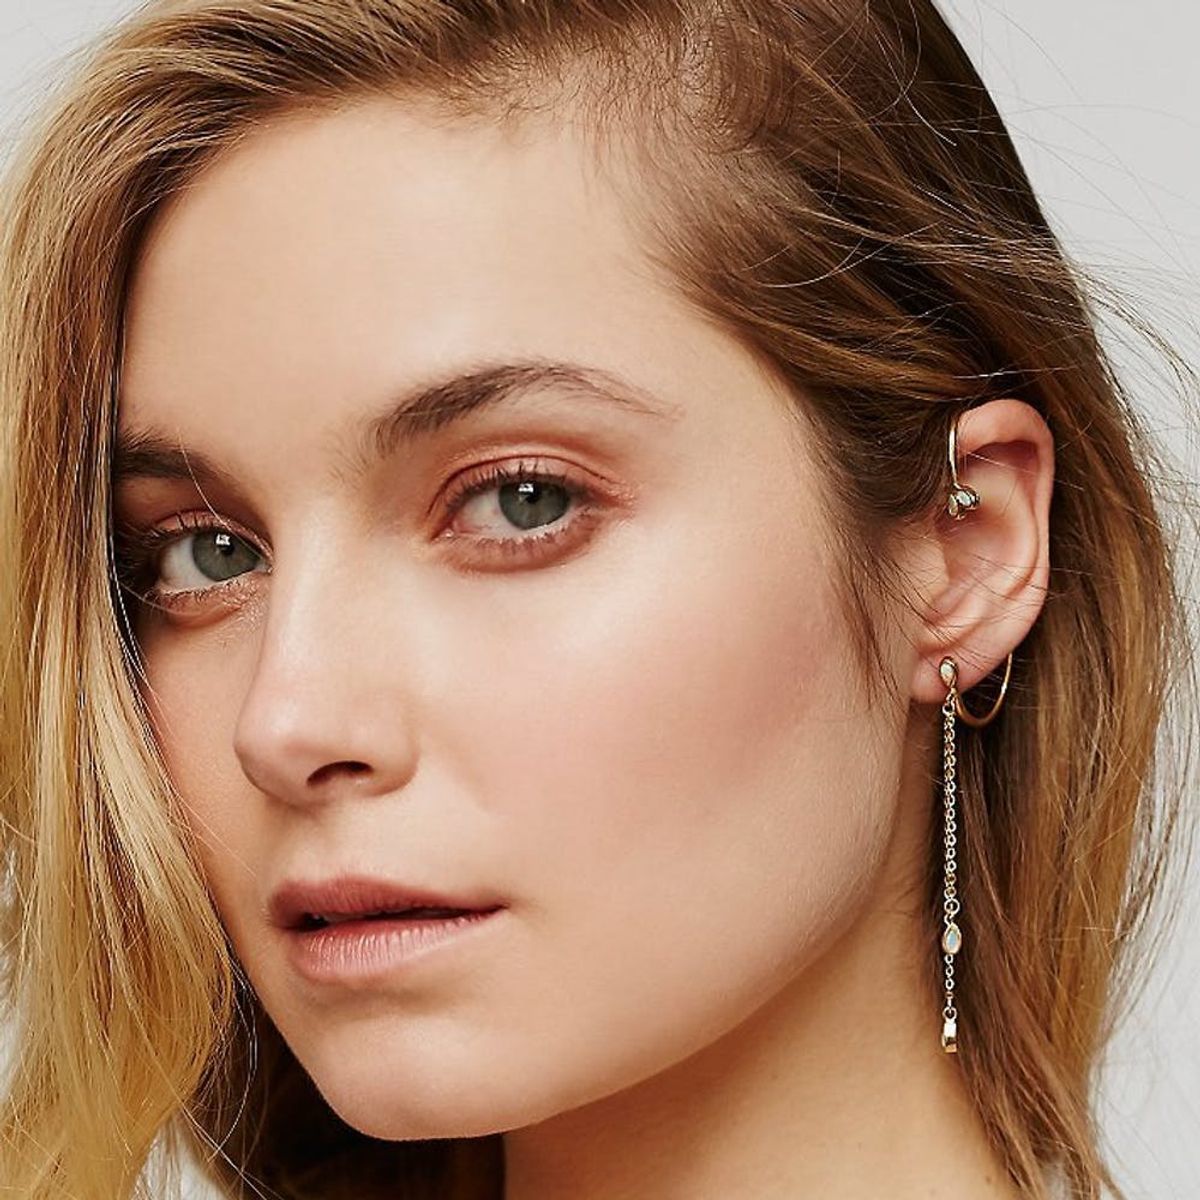 18 Rad Pierce-Free Earrings That Require Zero Commitment